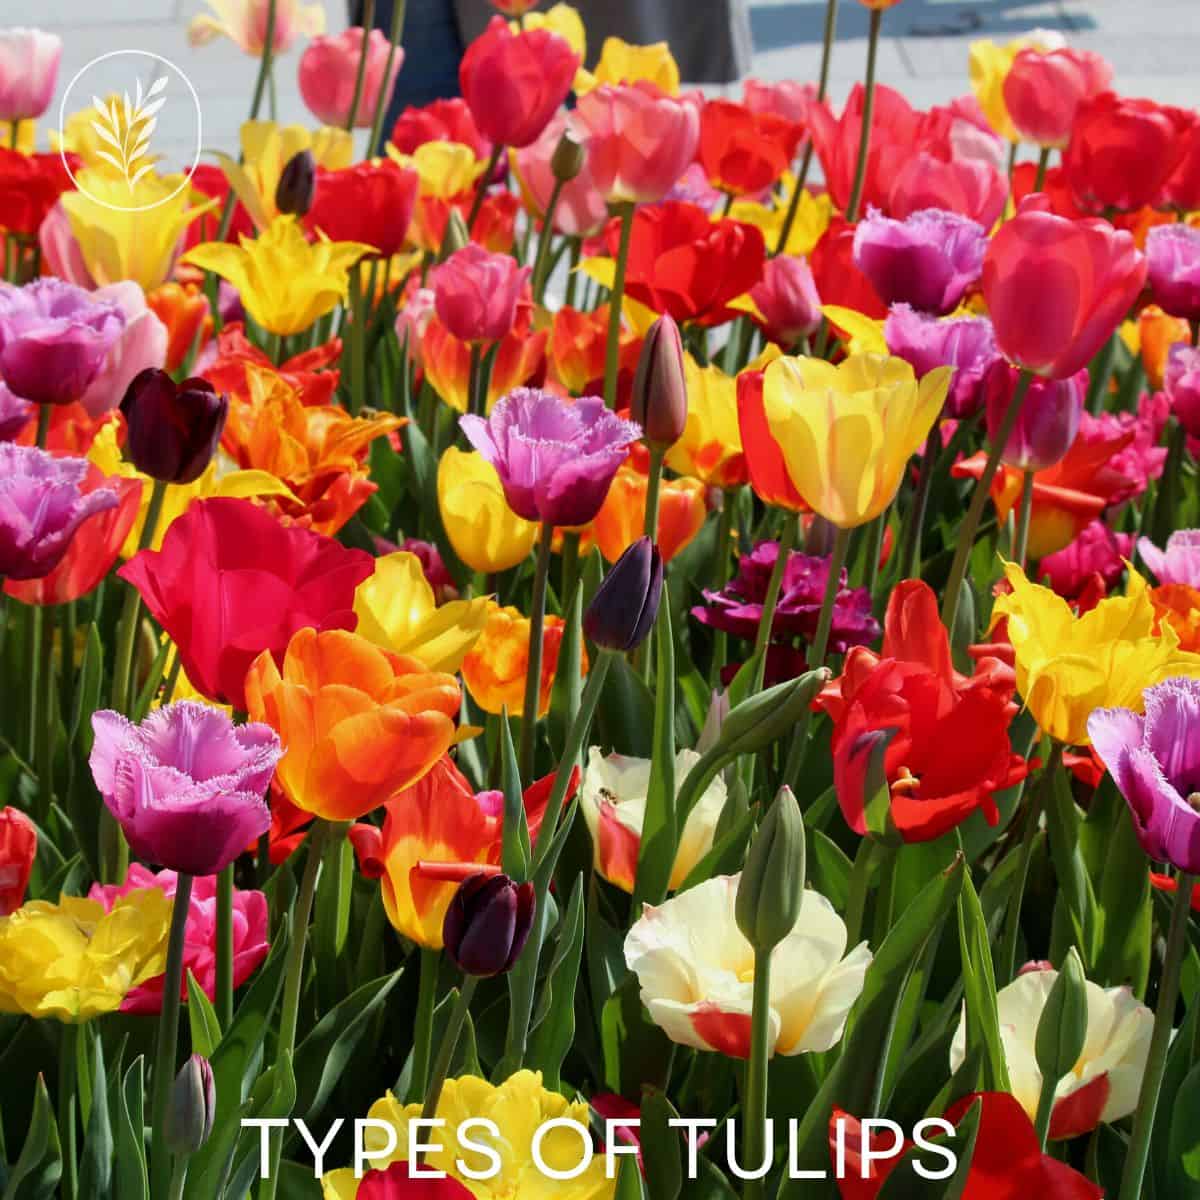 Types of tulips via @home4theharvest